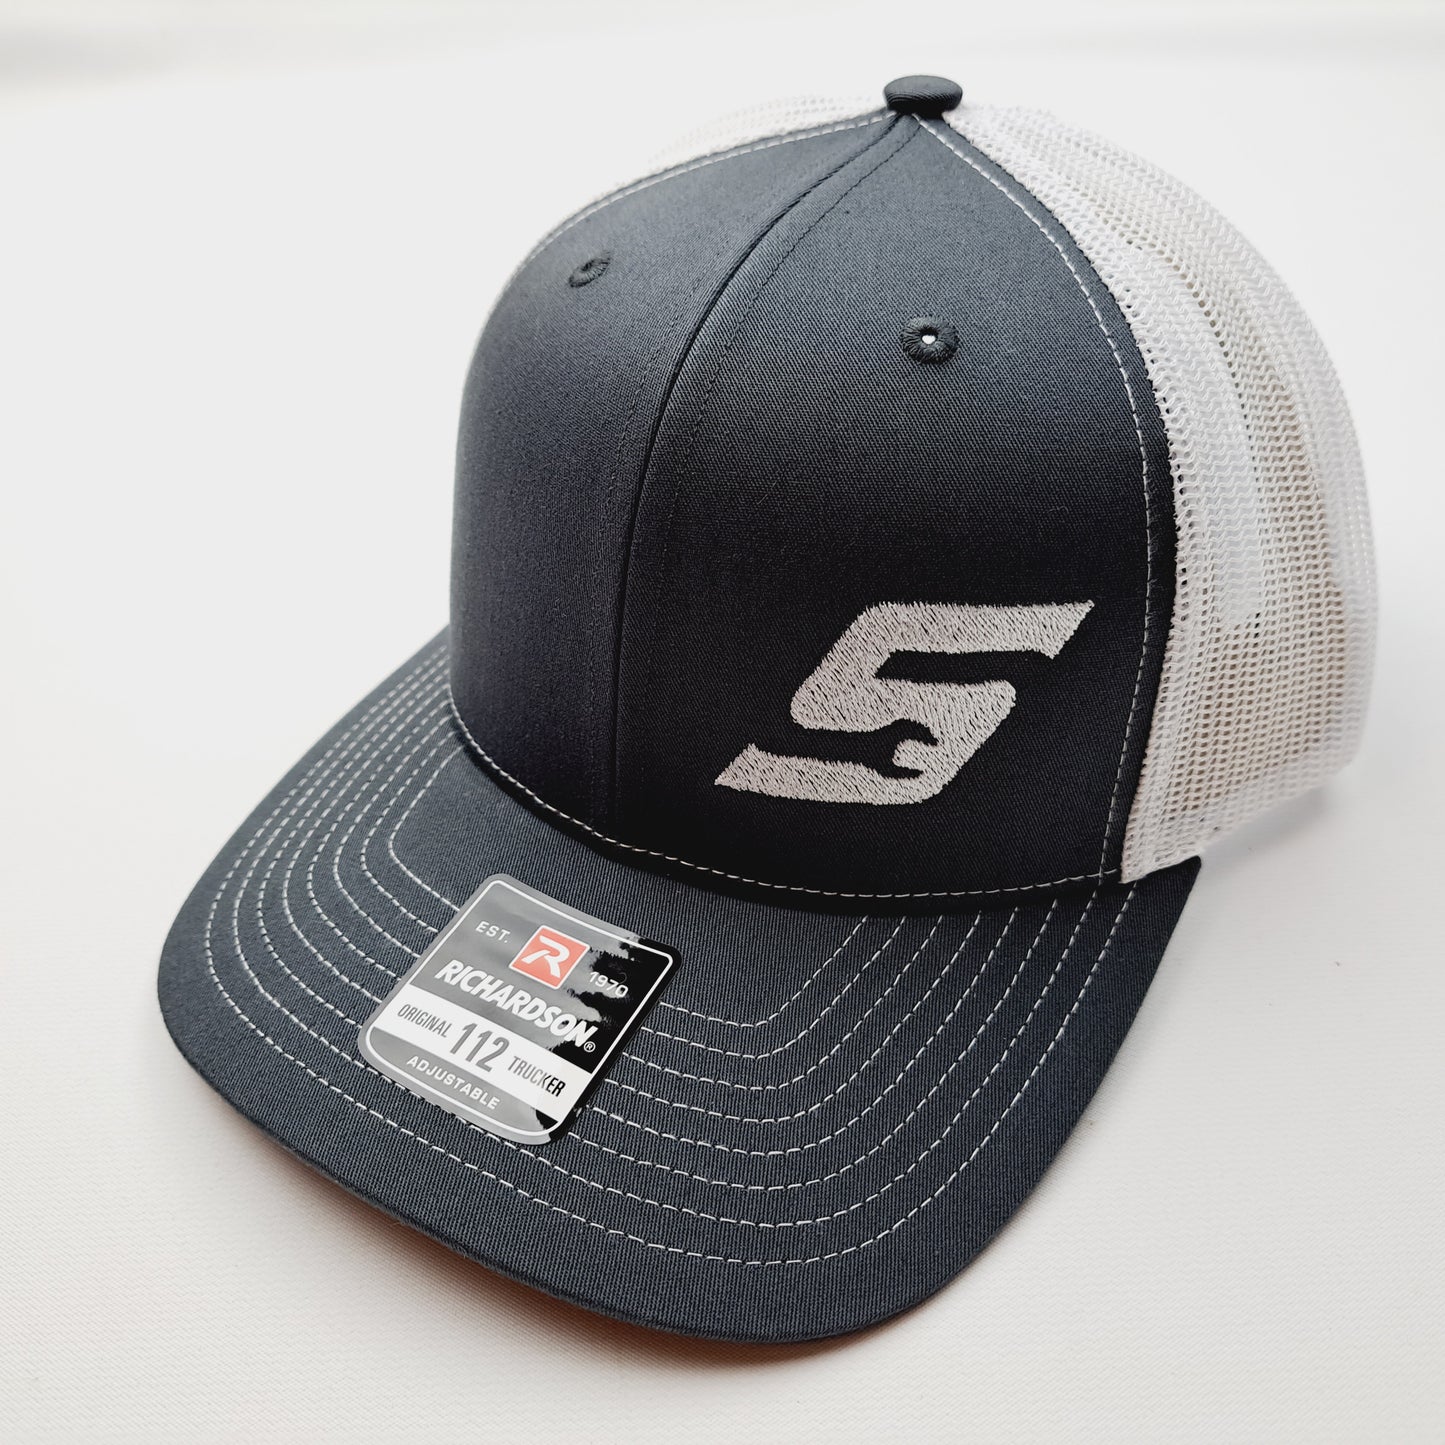 Snap On Snap-On Tools Richardson 112 Trucker Mesh Snapback Cap Hat Gray & White